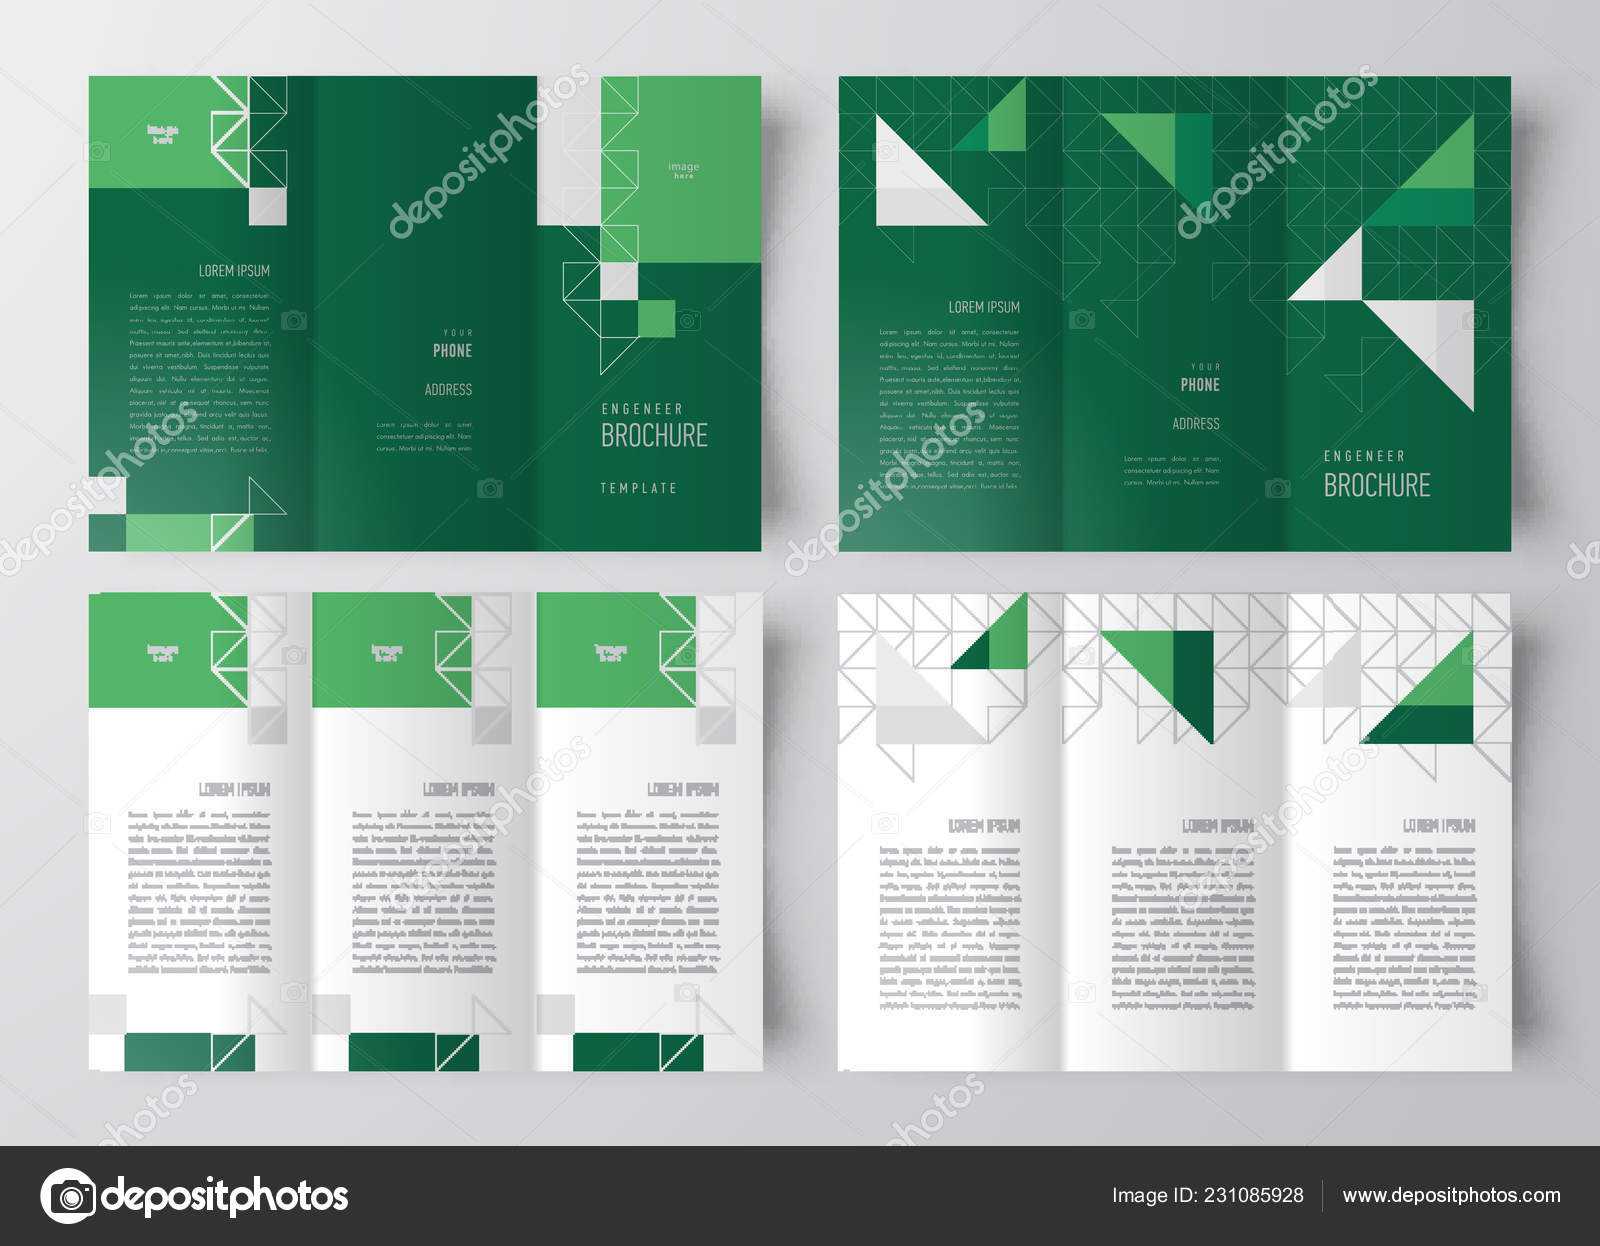 Brochure Design Template Engineering Abstract Triangles With Regard To Engineering Brochure Templates